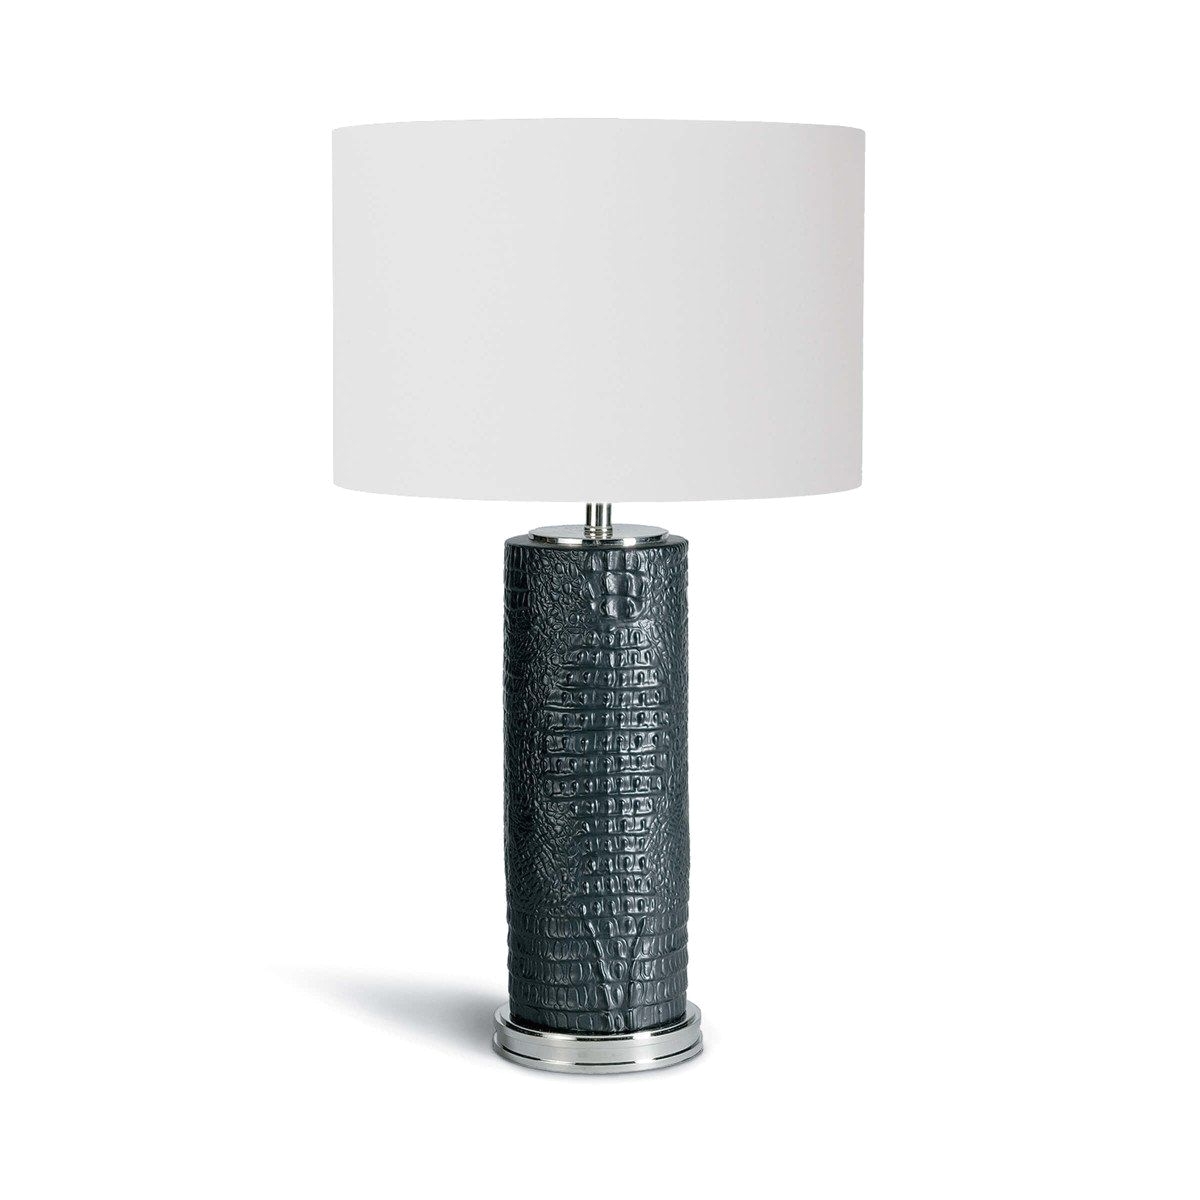 regina andrew design blake ceramic table lamp black